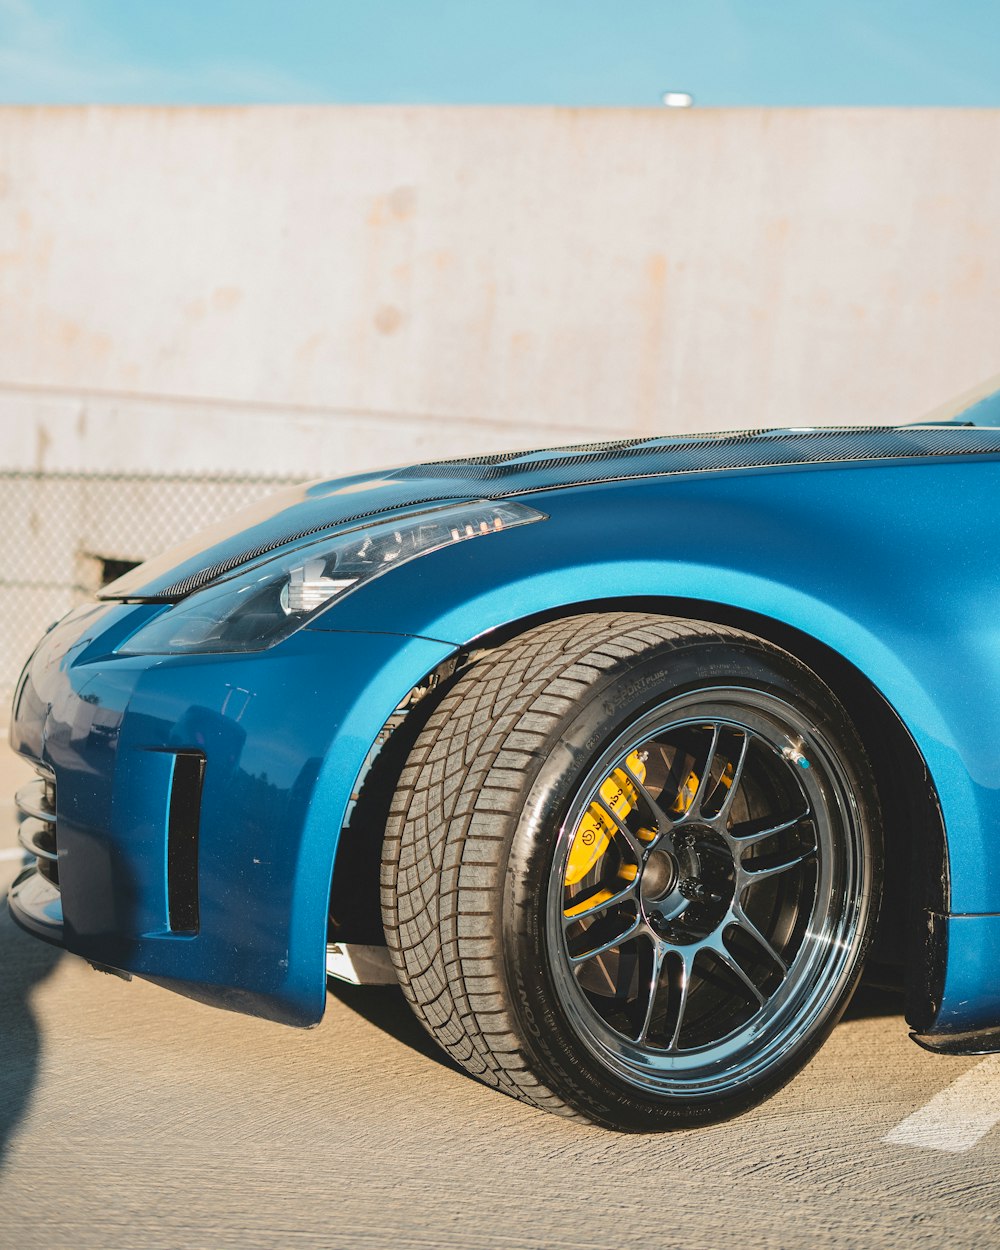 Voiture Ferrari bleue dans un garage